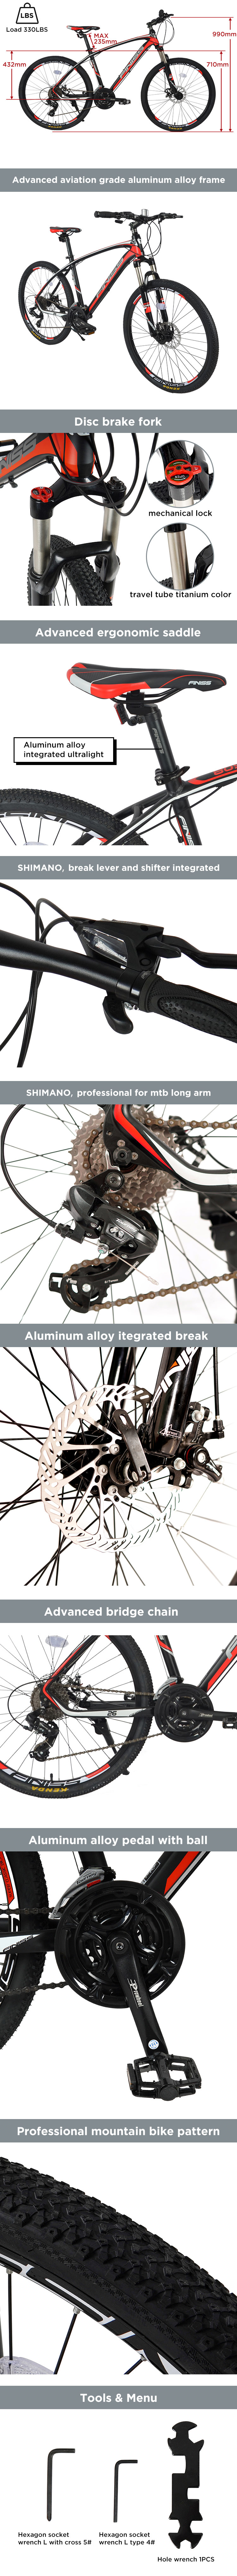 Finiss 26 Inch Bike SHIMANO 24-speed Shift Aluminum Alloy Frame Disk Brakes - Black/Red